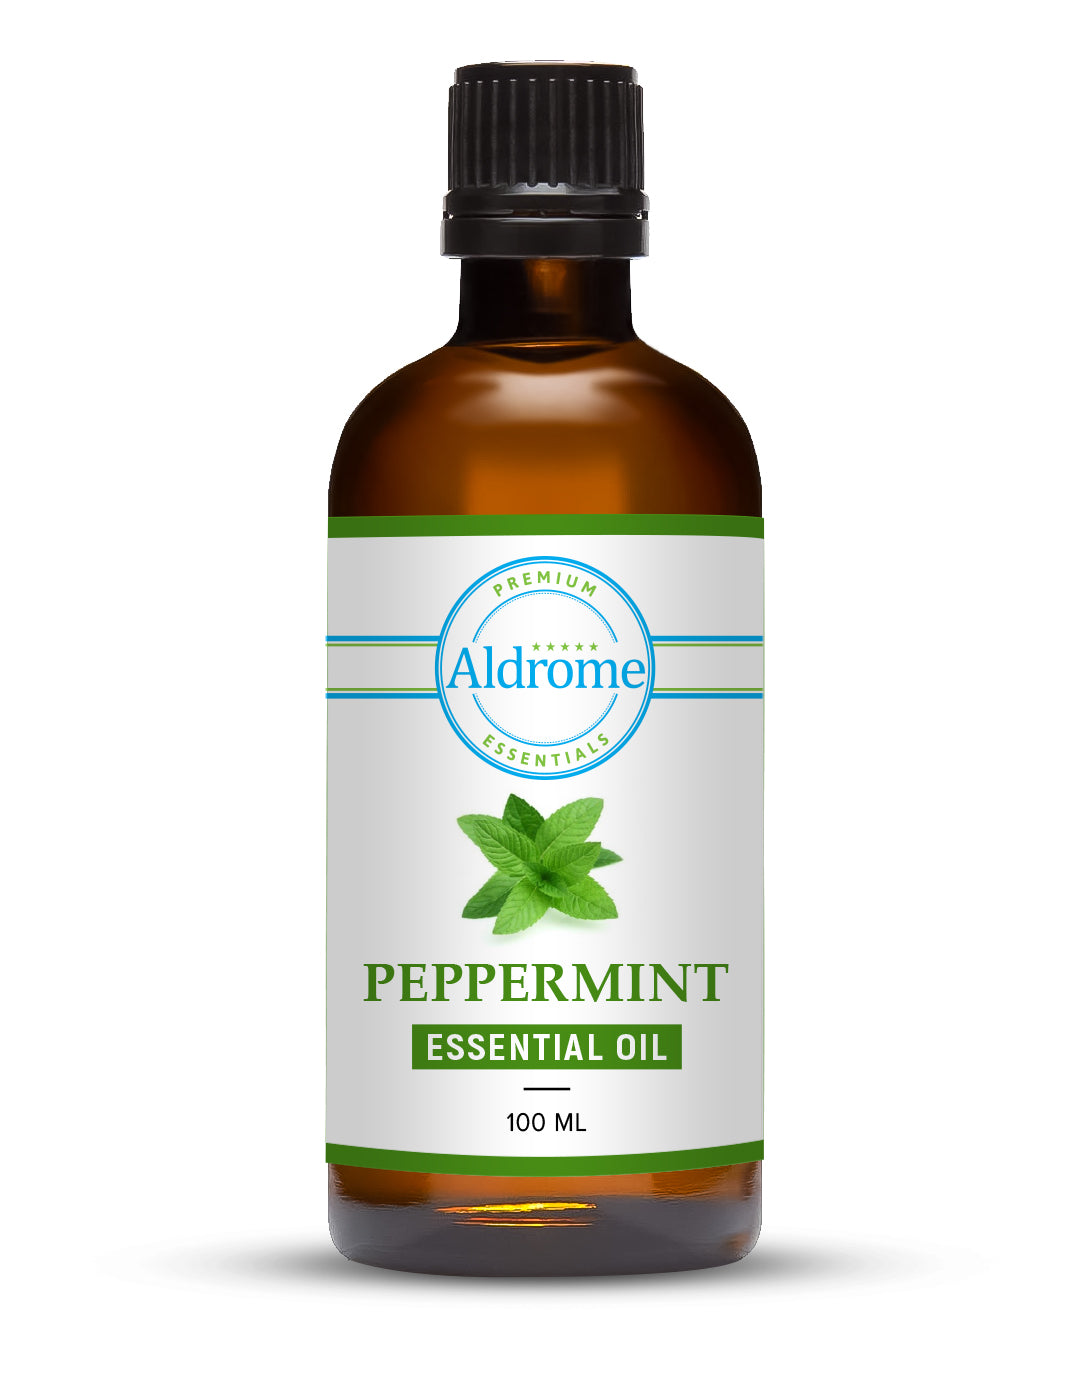 Peppermint Essential Oil - 100ml | Buy Peppermint Essential Oil | Aldrome Premium Fragrance Oil